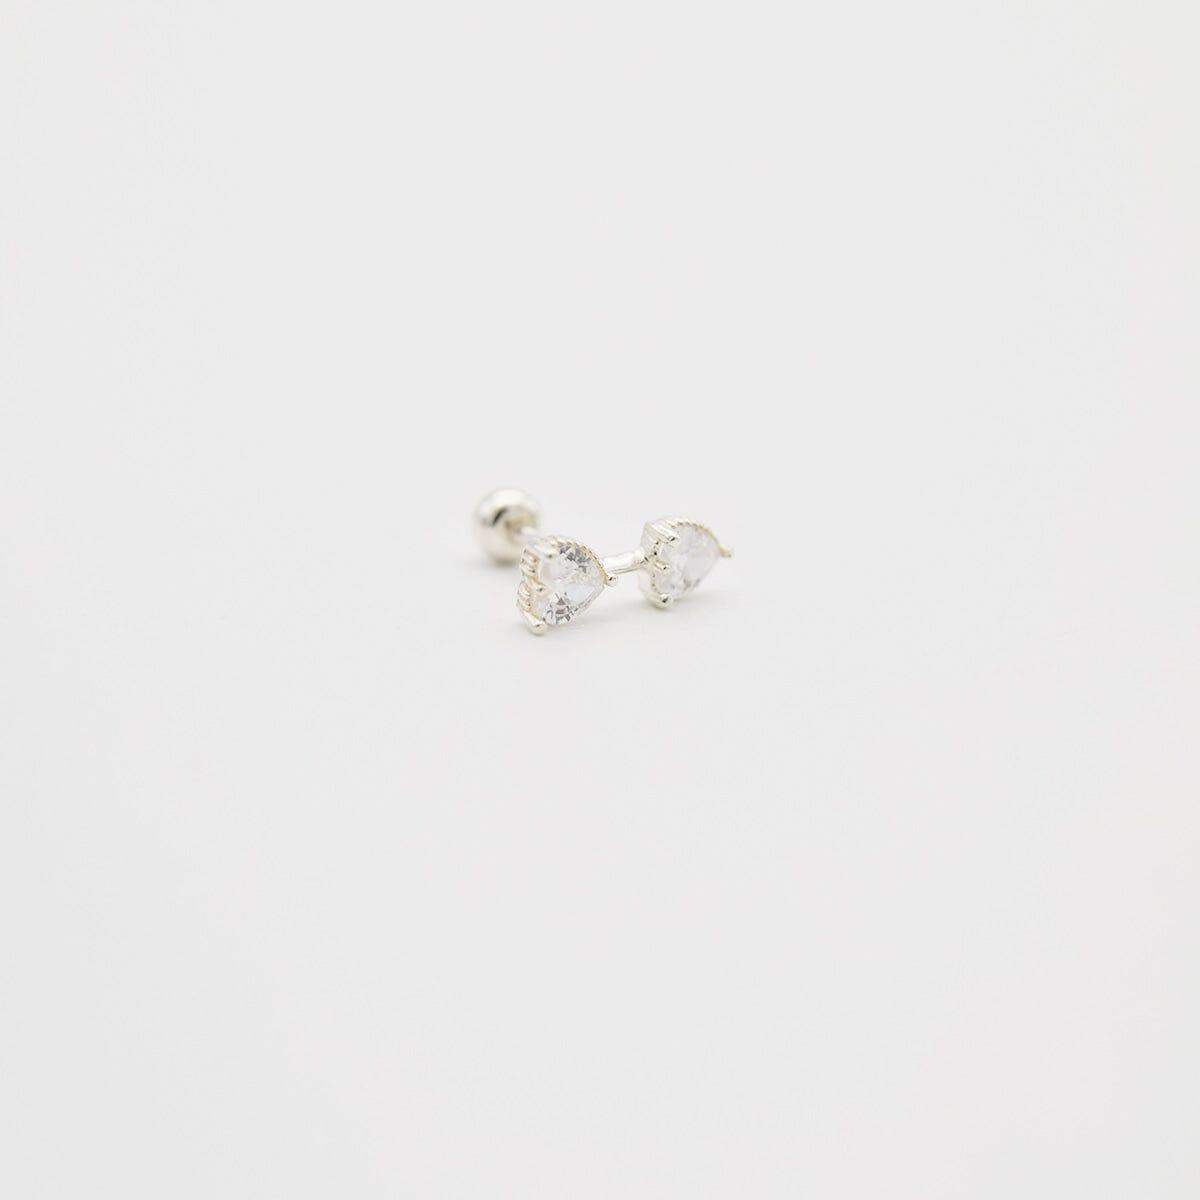 [925 Silver]ピンクキューピットピアス[4セット] Earrings 10000won 